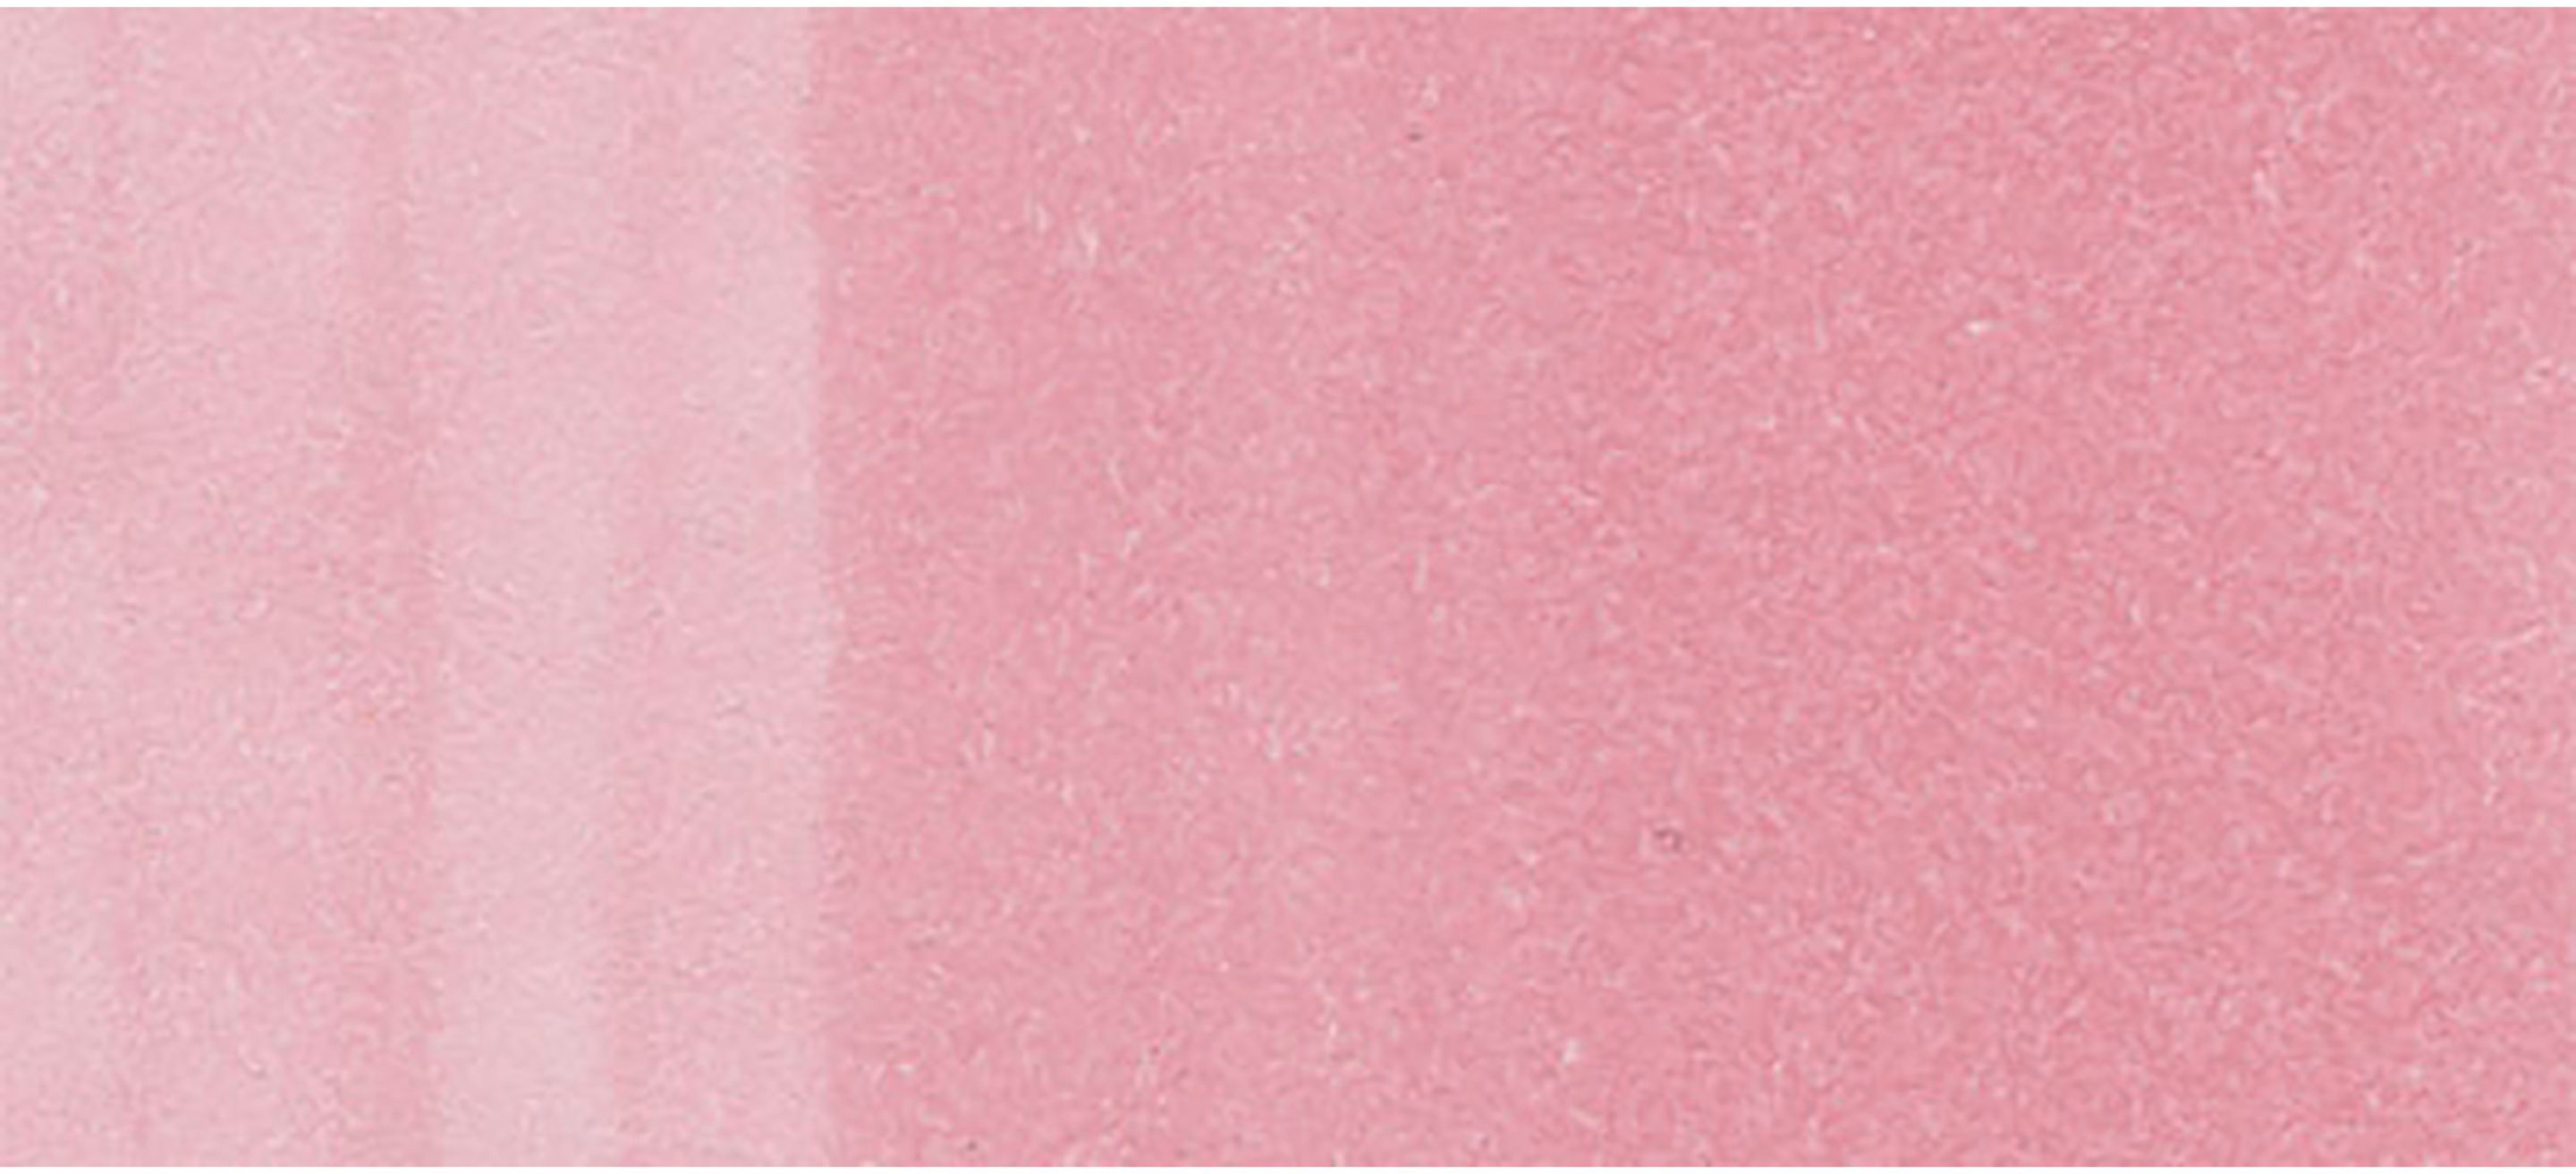 COPIC Marker Sketch 21075287 R81 - Rose Pink